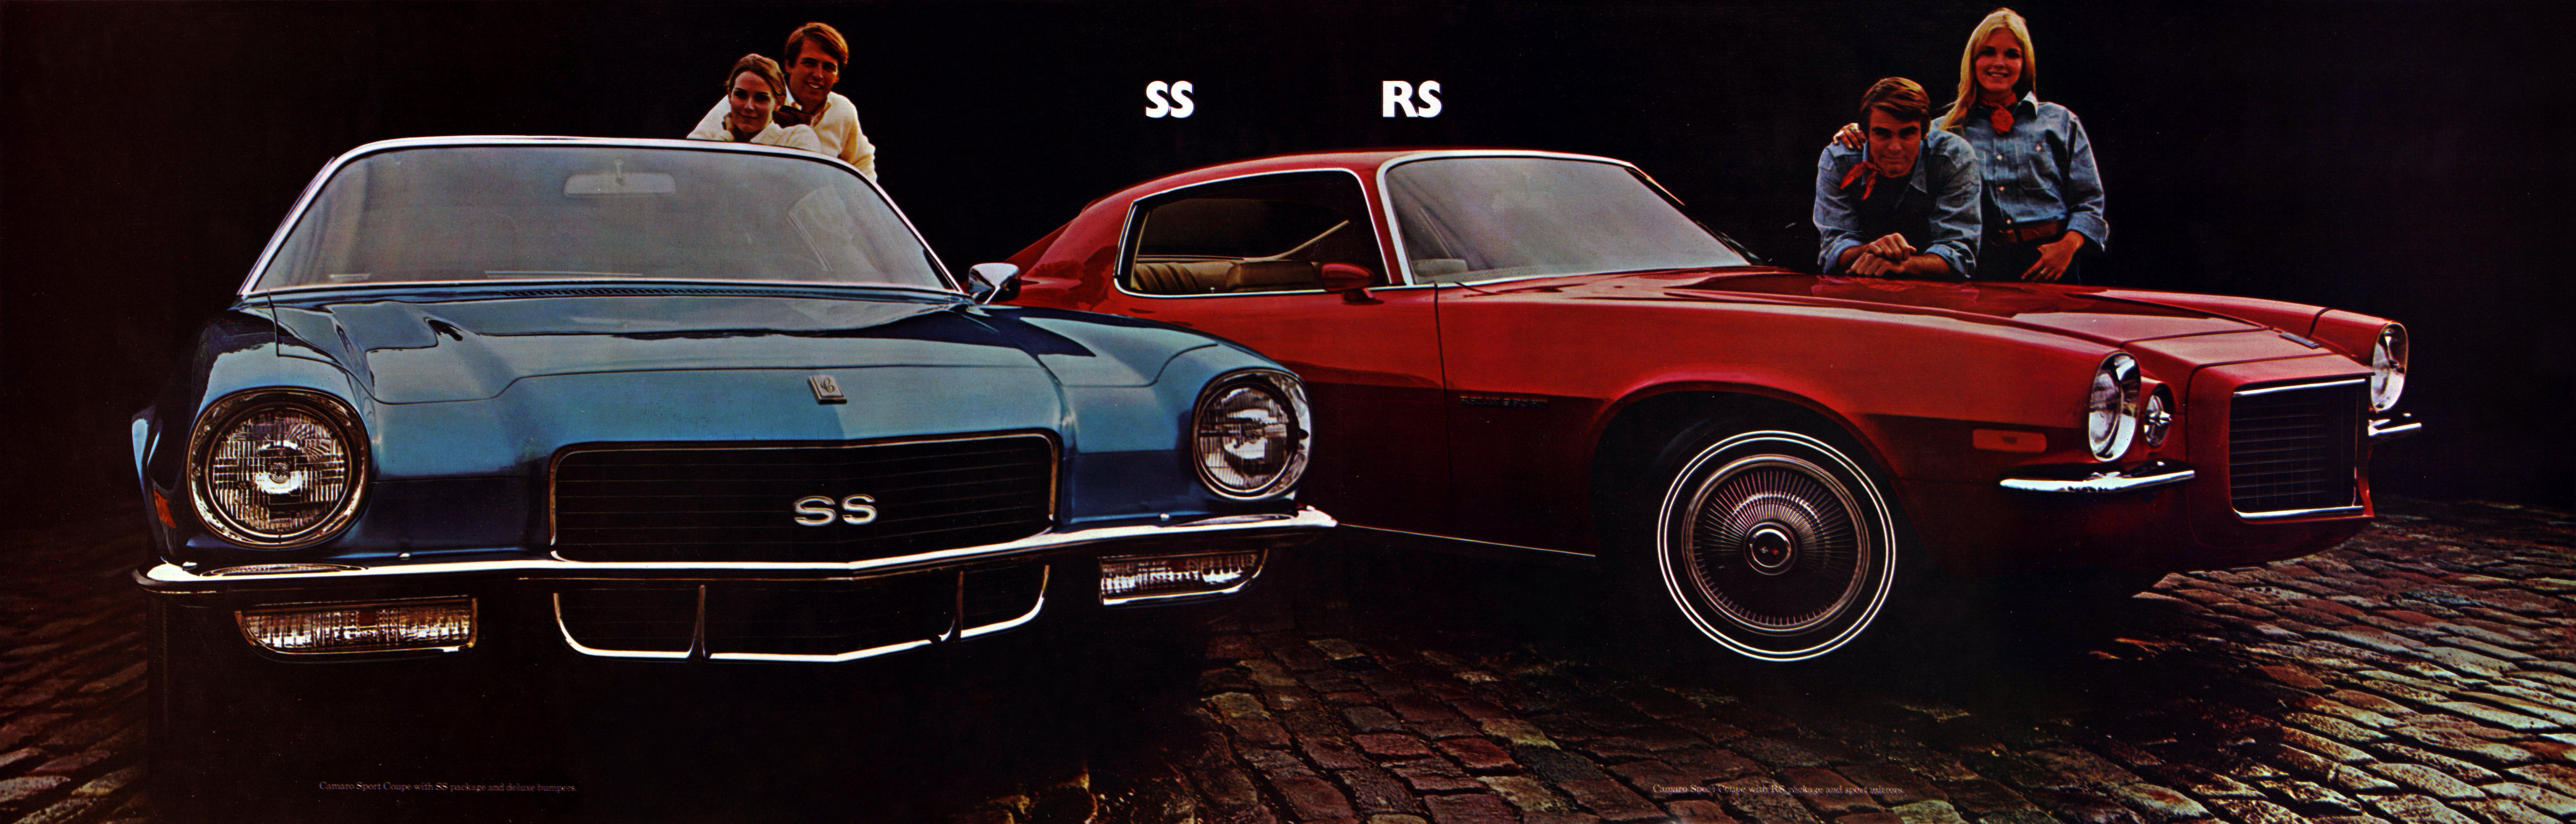 1970_Chevrolet_Camaro-07-08-09-10